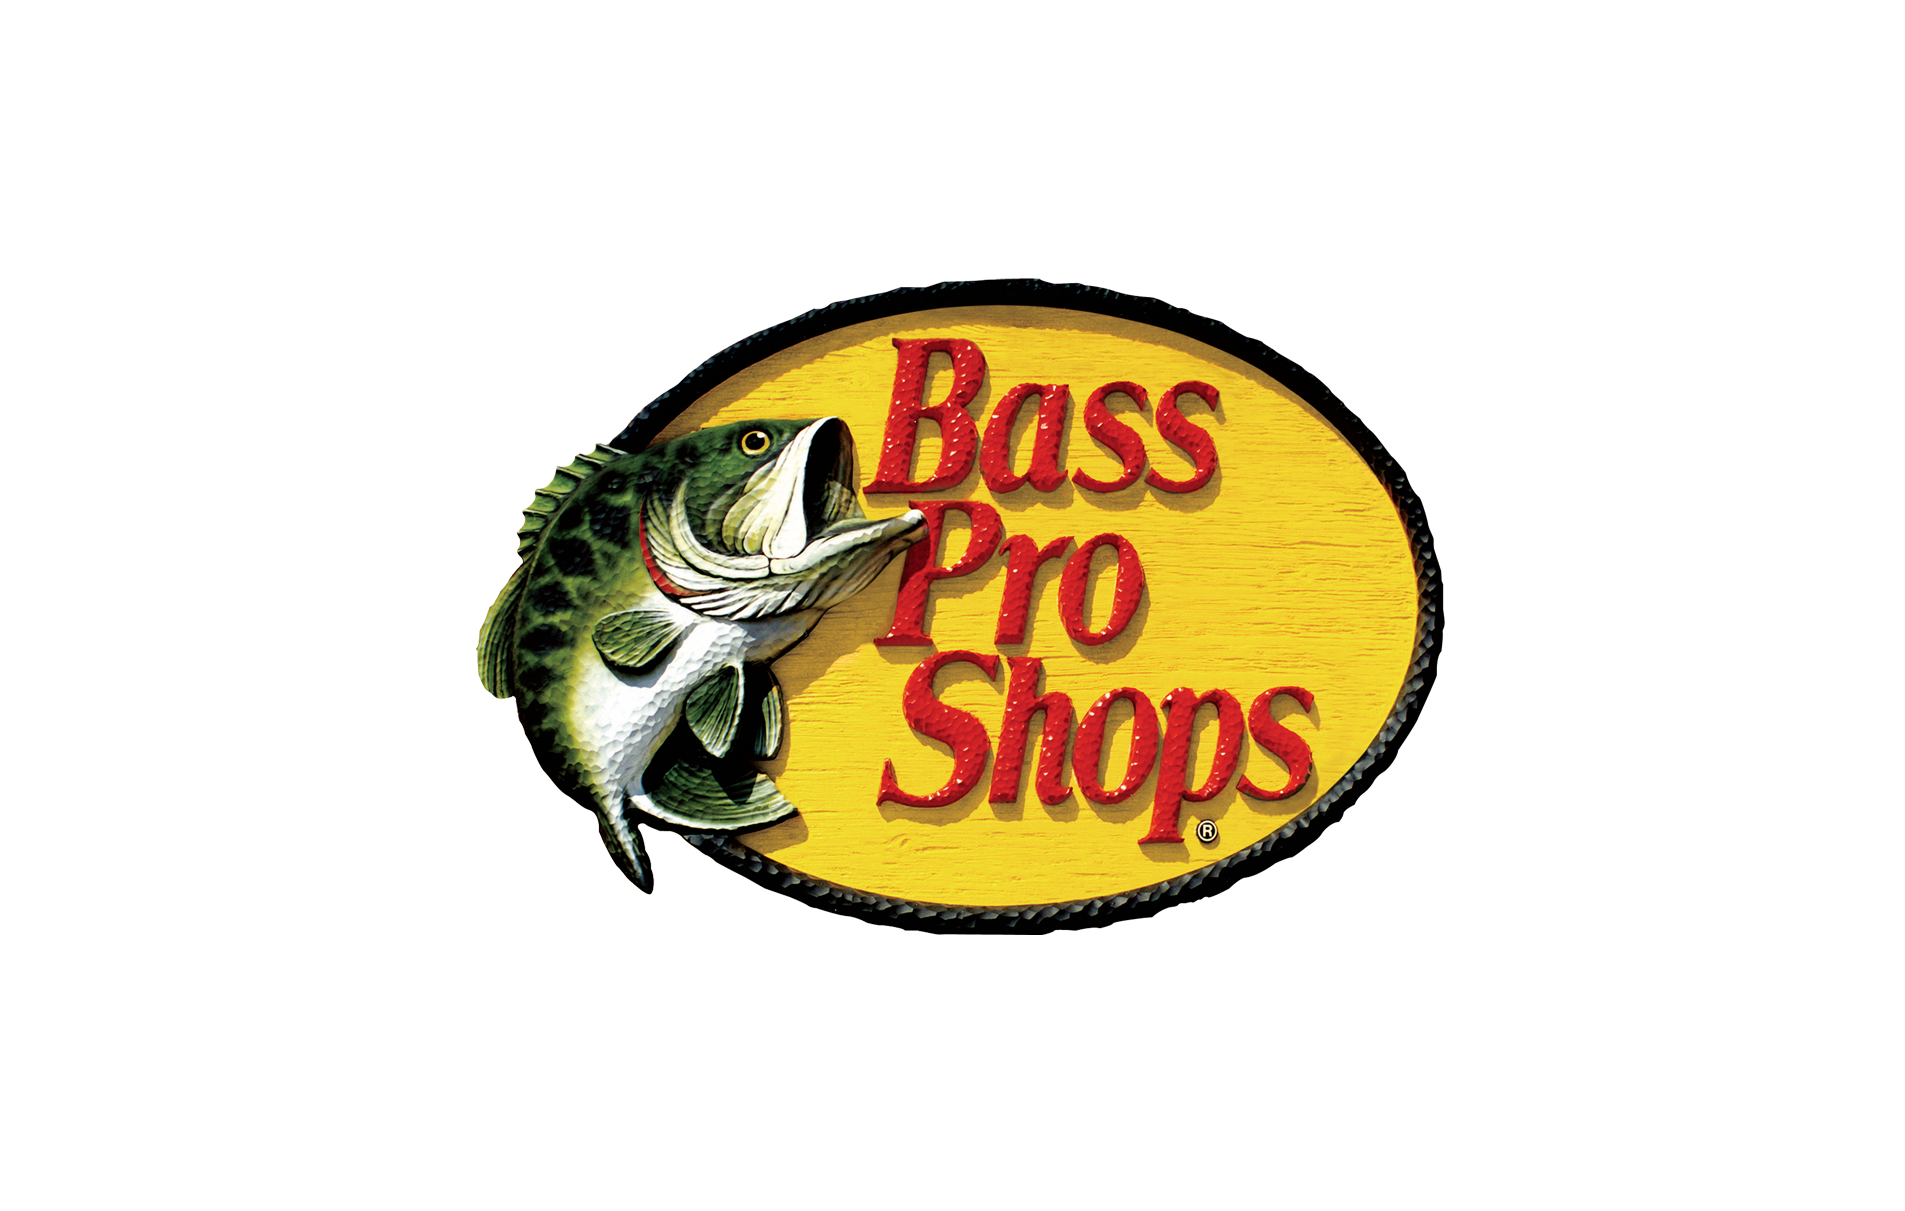 Bass Pro shops logo. Басс лого. Basso логотип. Bass Pro shops inside. Сказки басс